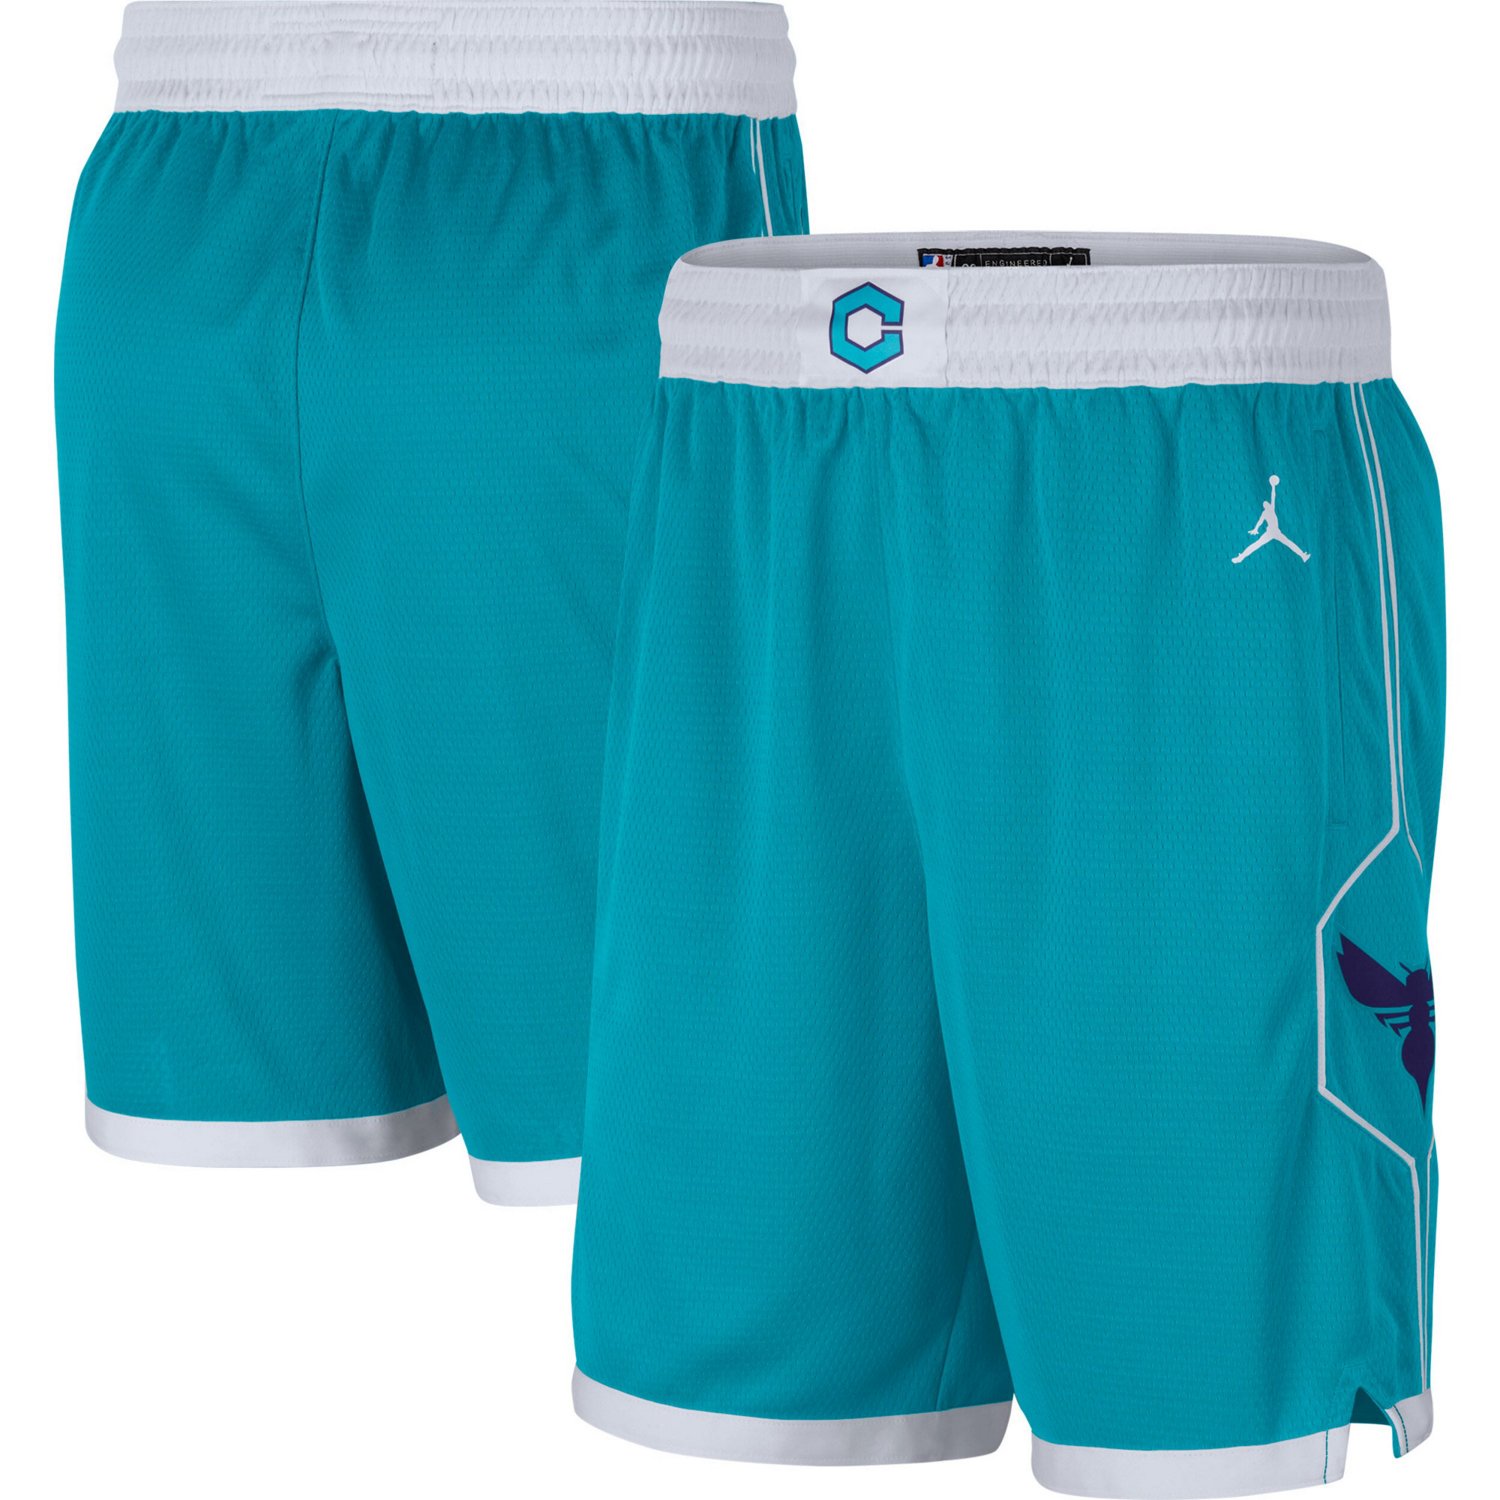 Jordan Brand 2019 20 Charlotte Hornets Icon Edition Swingman Shorts